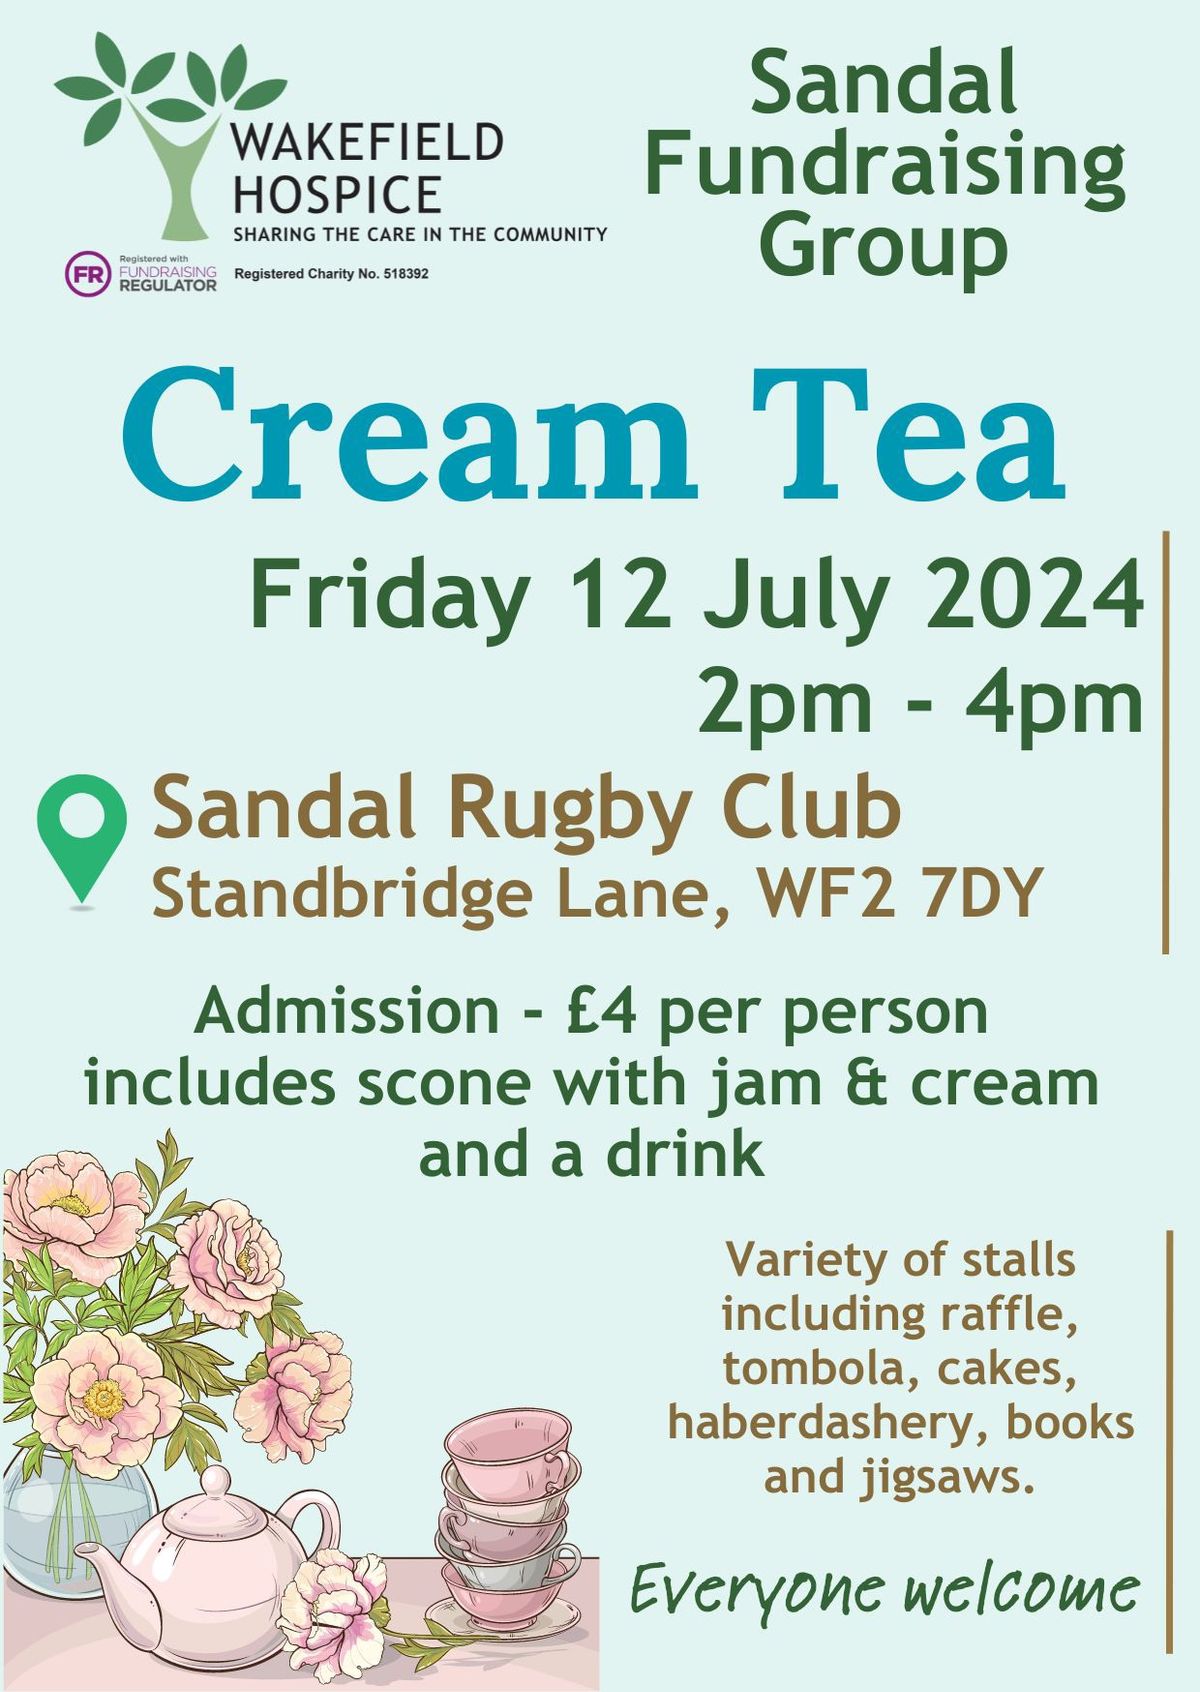 Sandal Fundraising Group Cream Tea